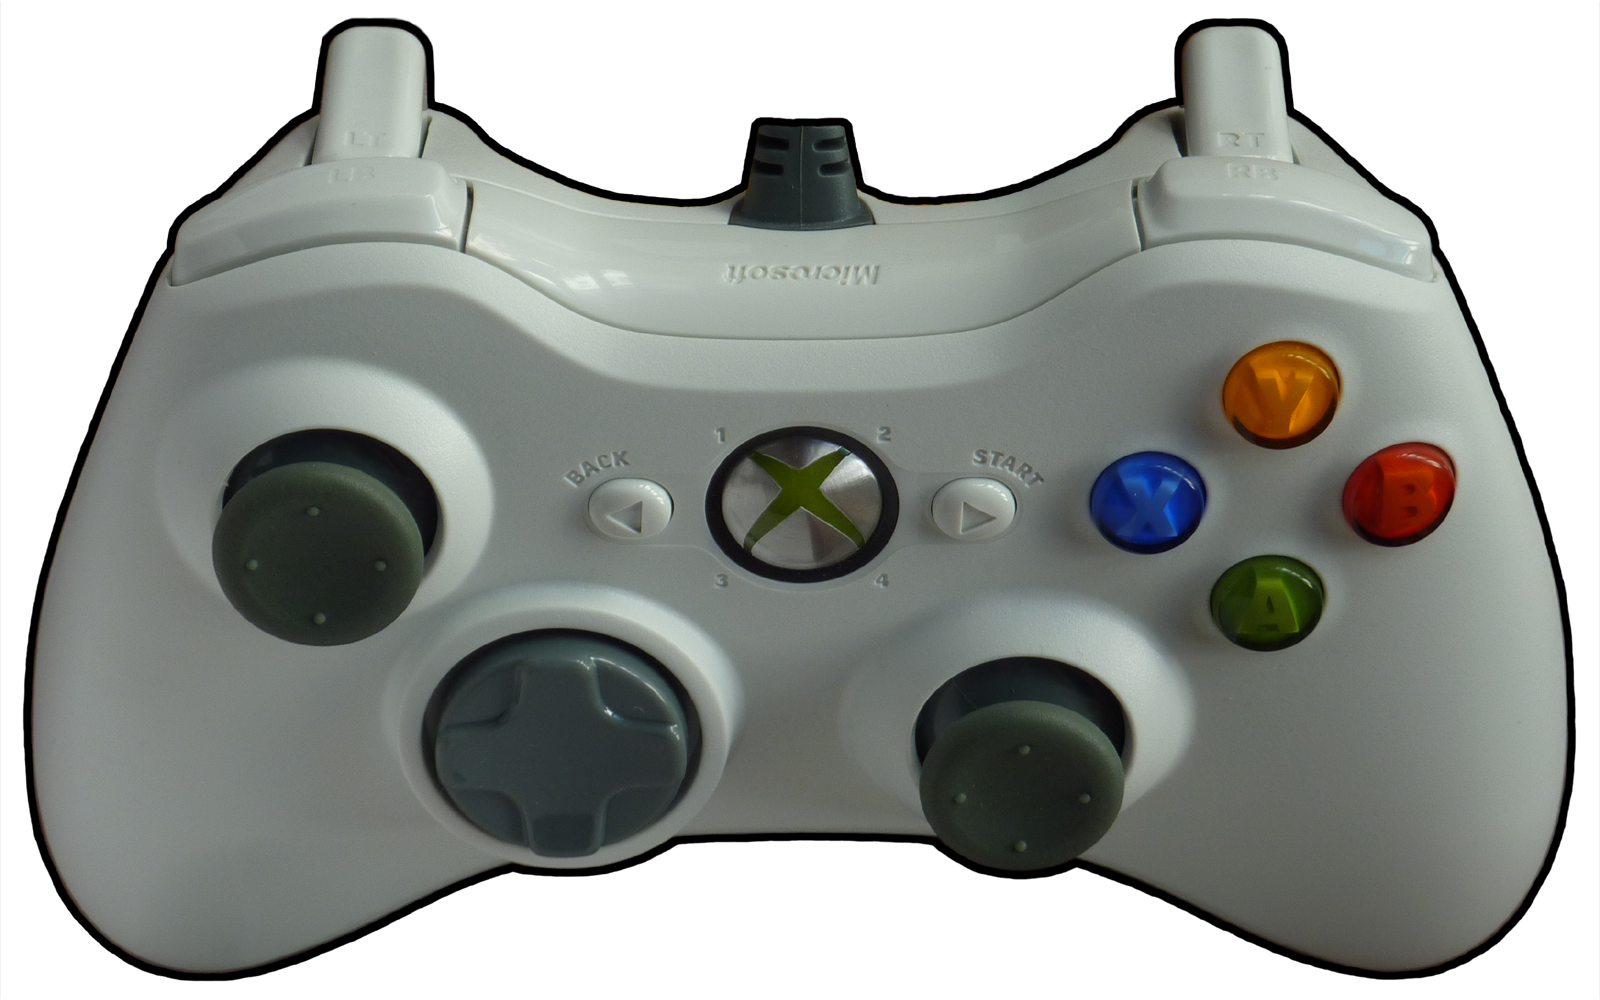 Что означает джойстик. Xbox 360 Controller. Джойстик Xbox 360 управление. Геймпад Xbox 360 раскладка. Хбокс 360 управление джойстик РС.